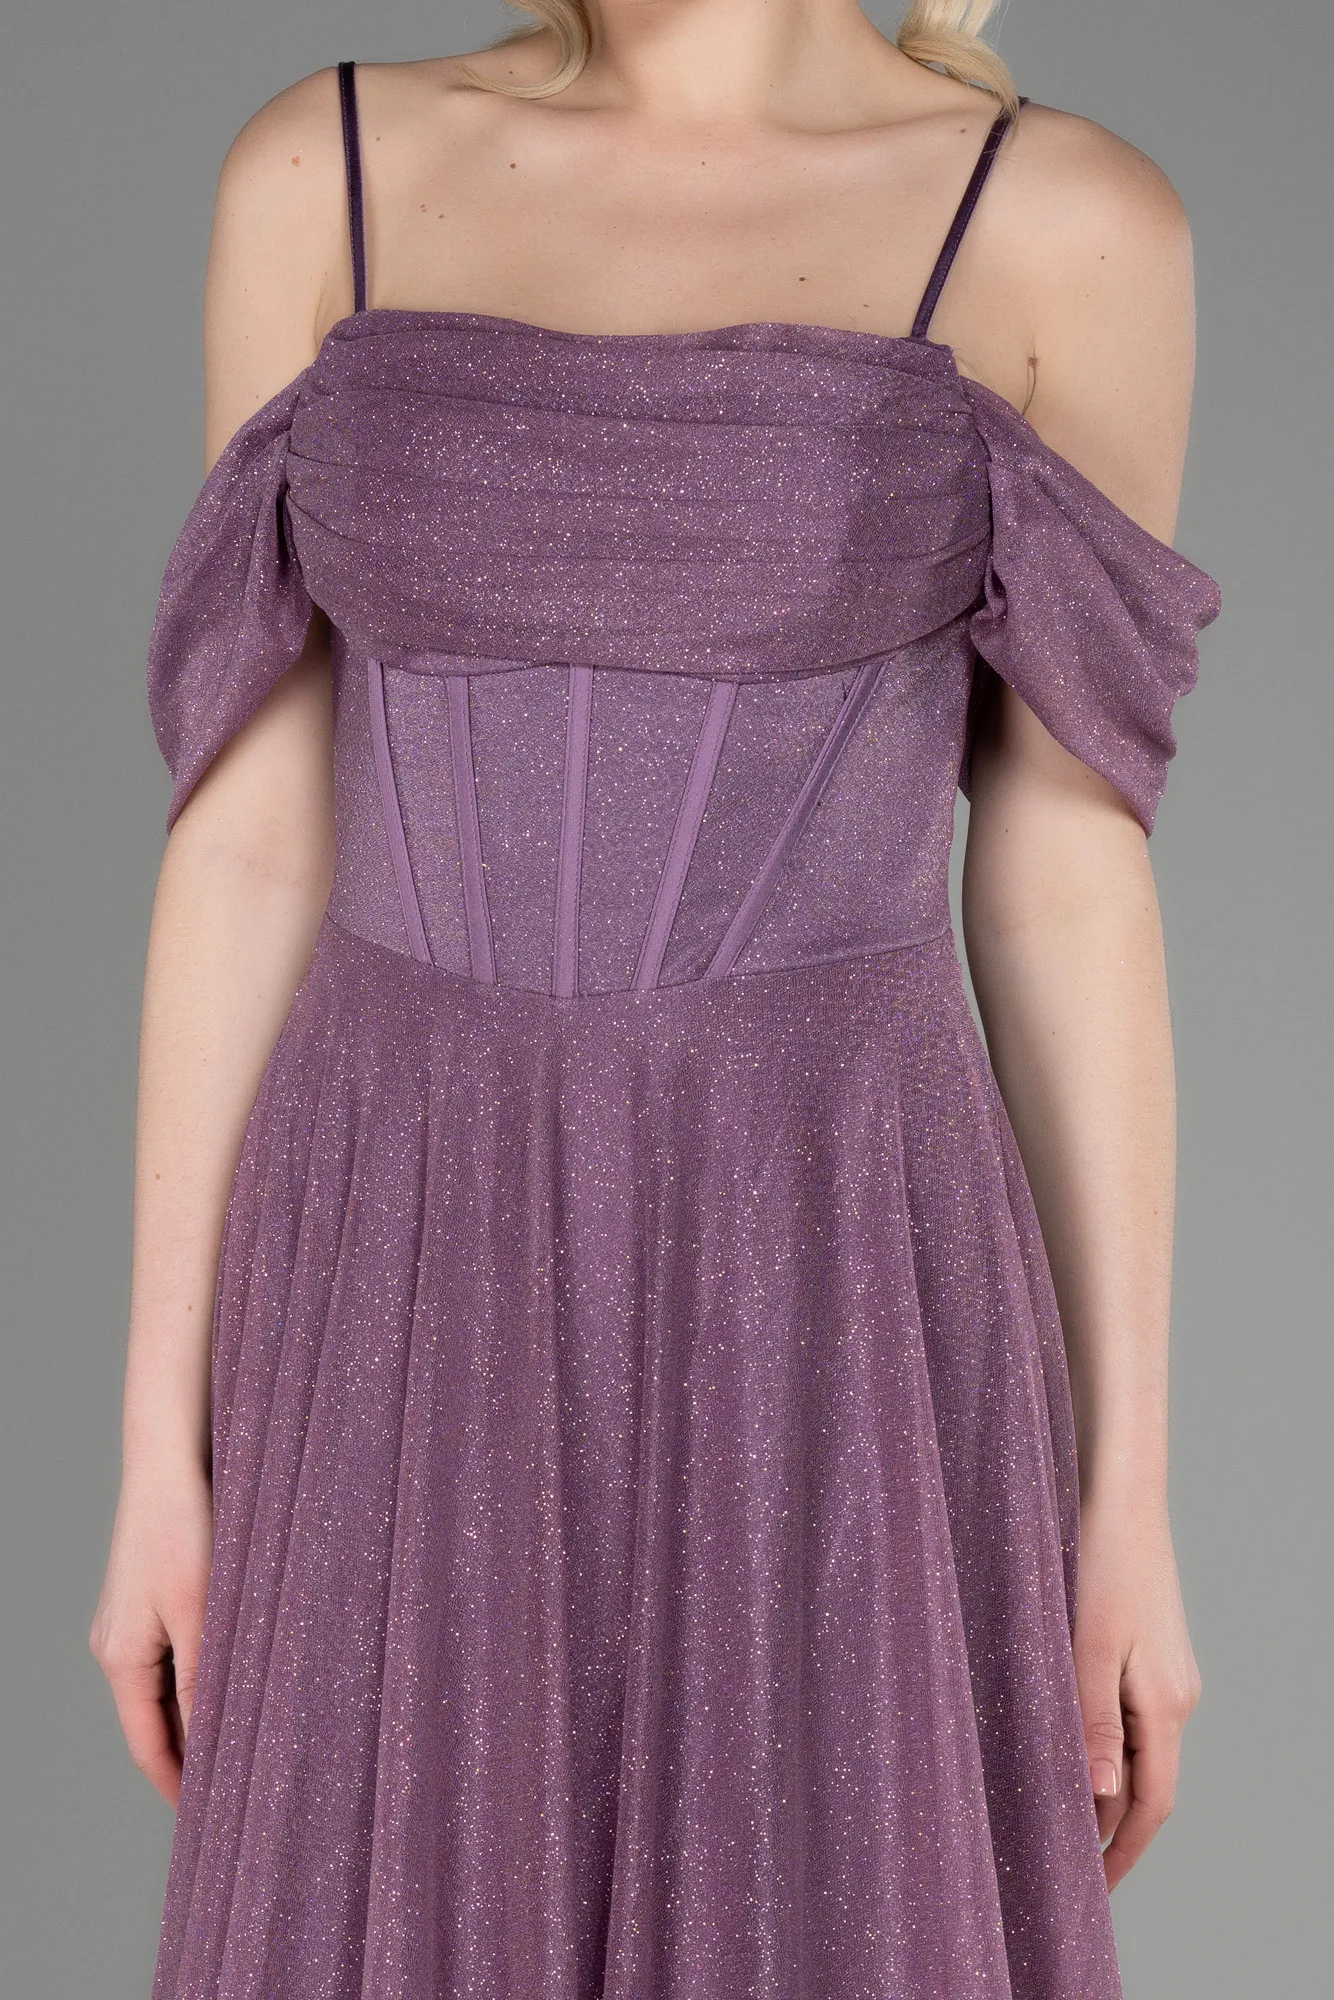 Lavender-Long Evening Dress ABU3767